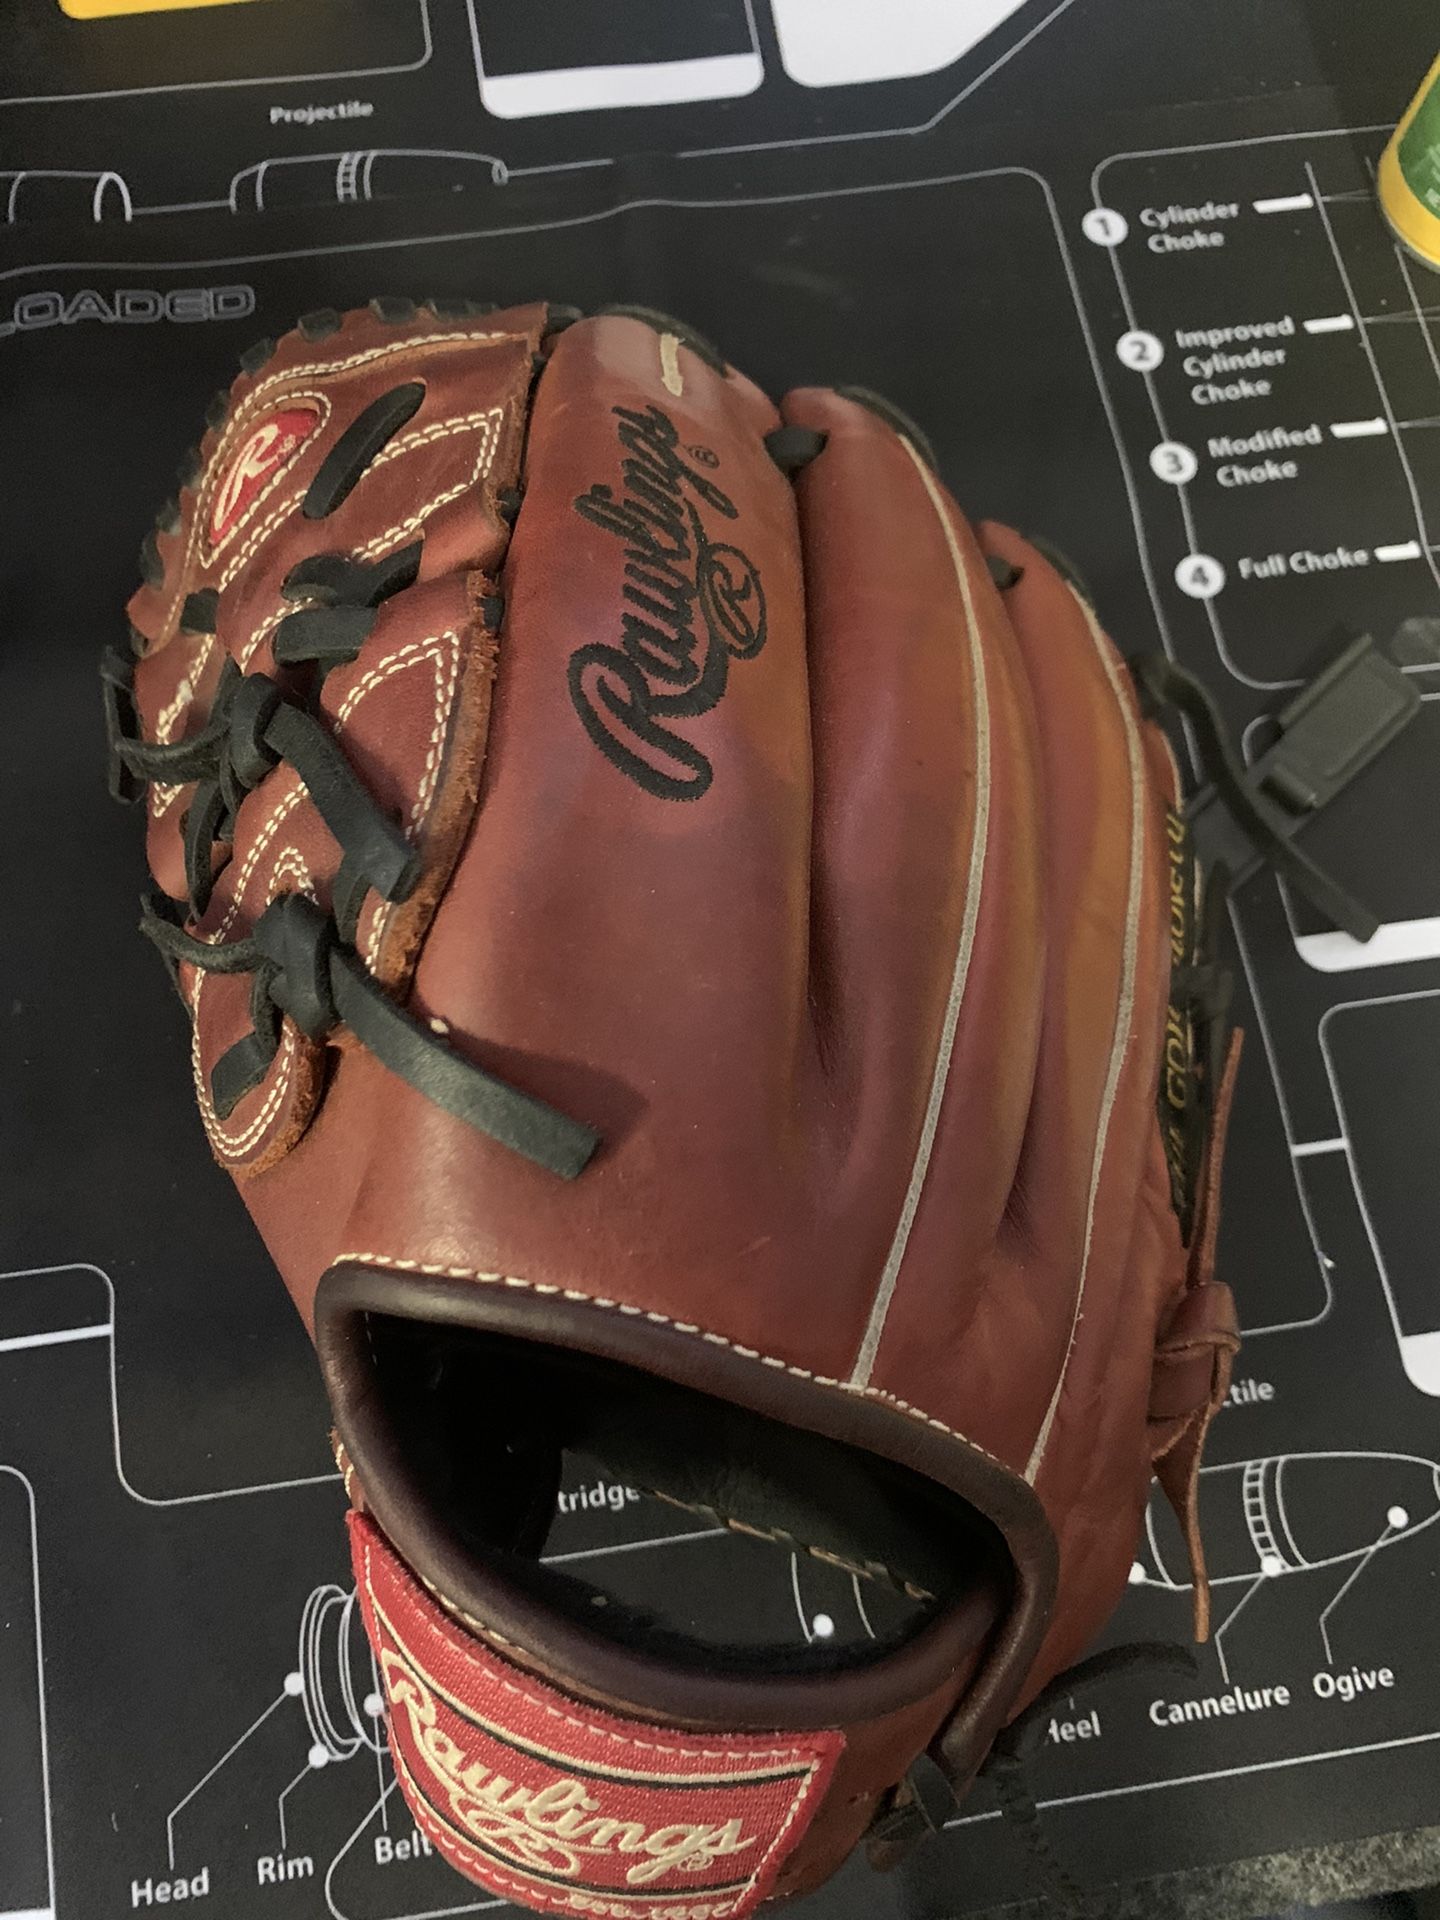 Rawlings-Heart of the Hide 11.5” lefty baseball glove